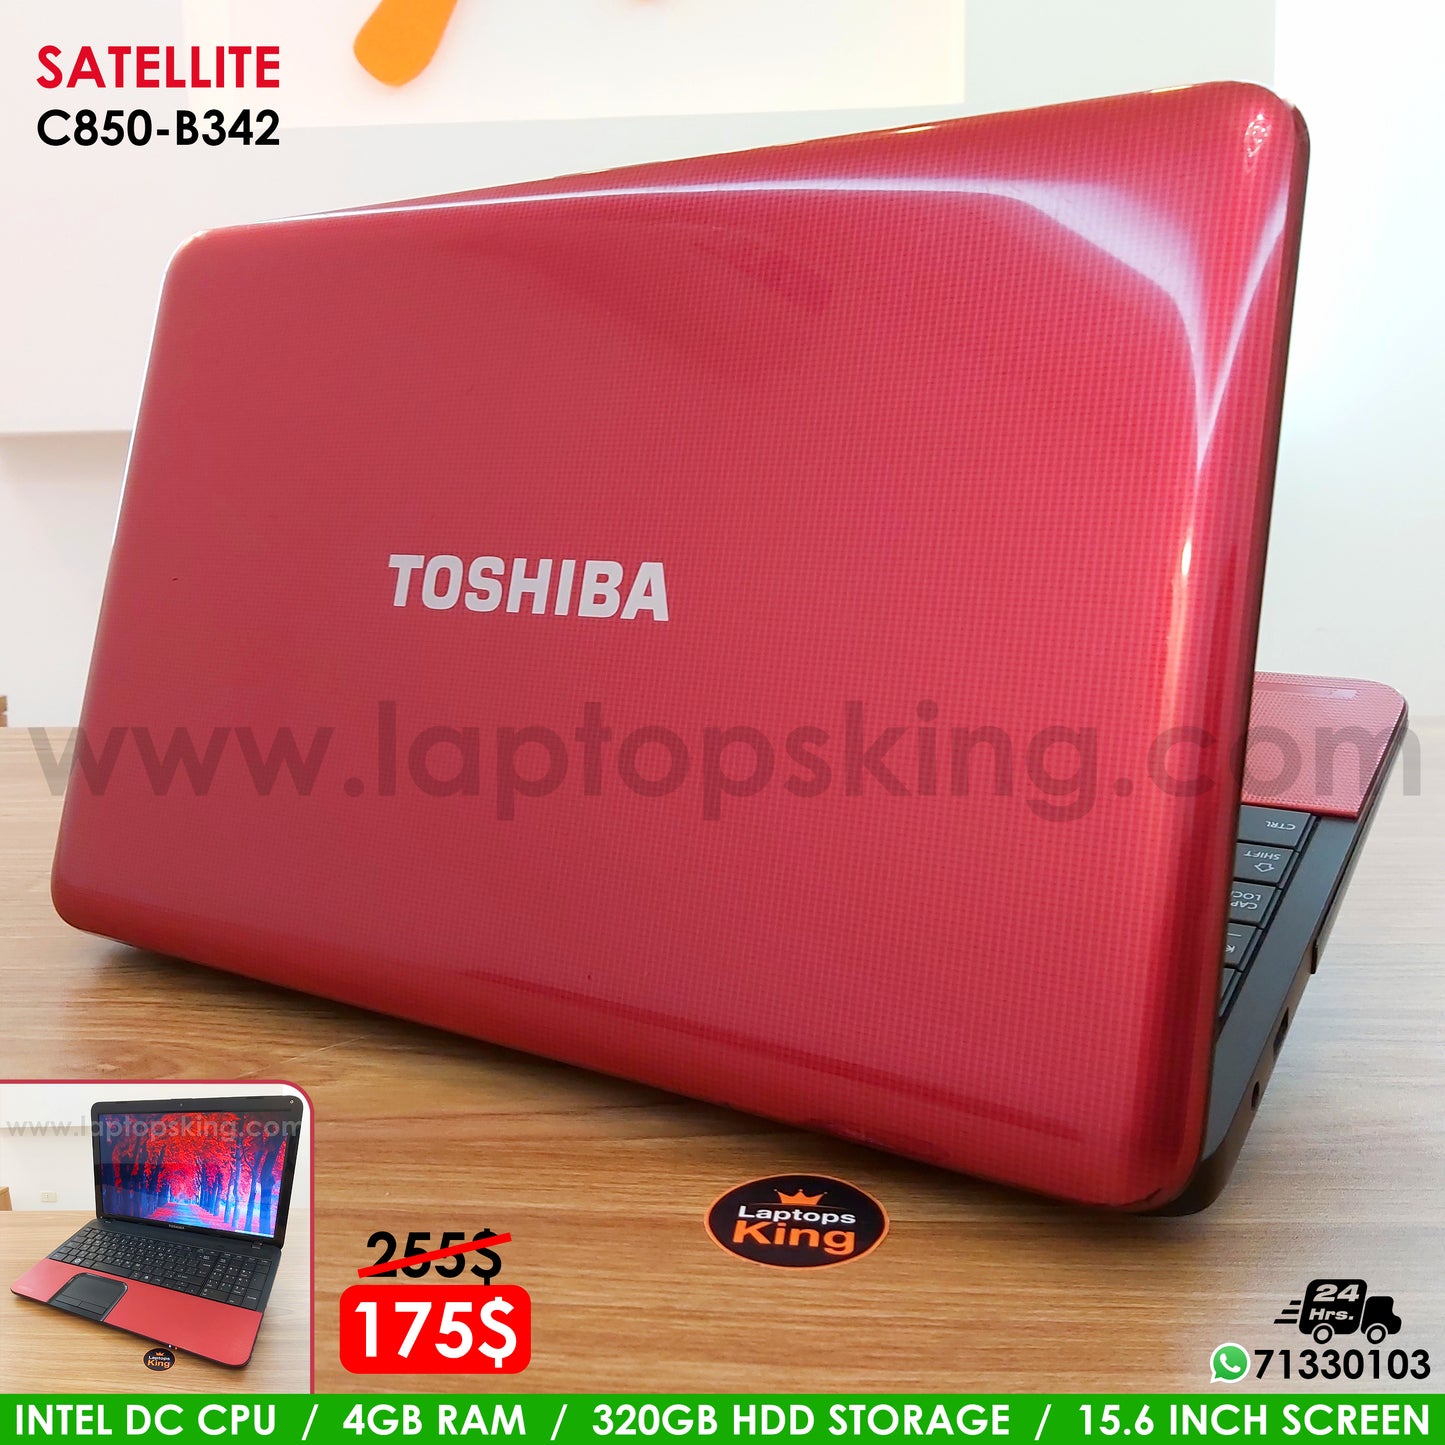 Toshiba Satellite C850-B342 Intel DC CPU Laptop (Used Very Clean)